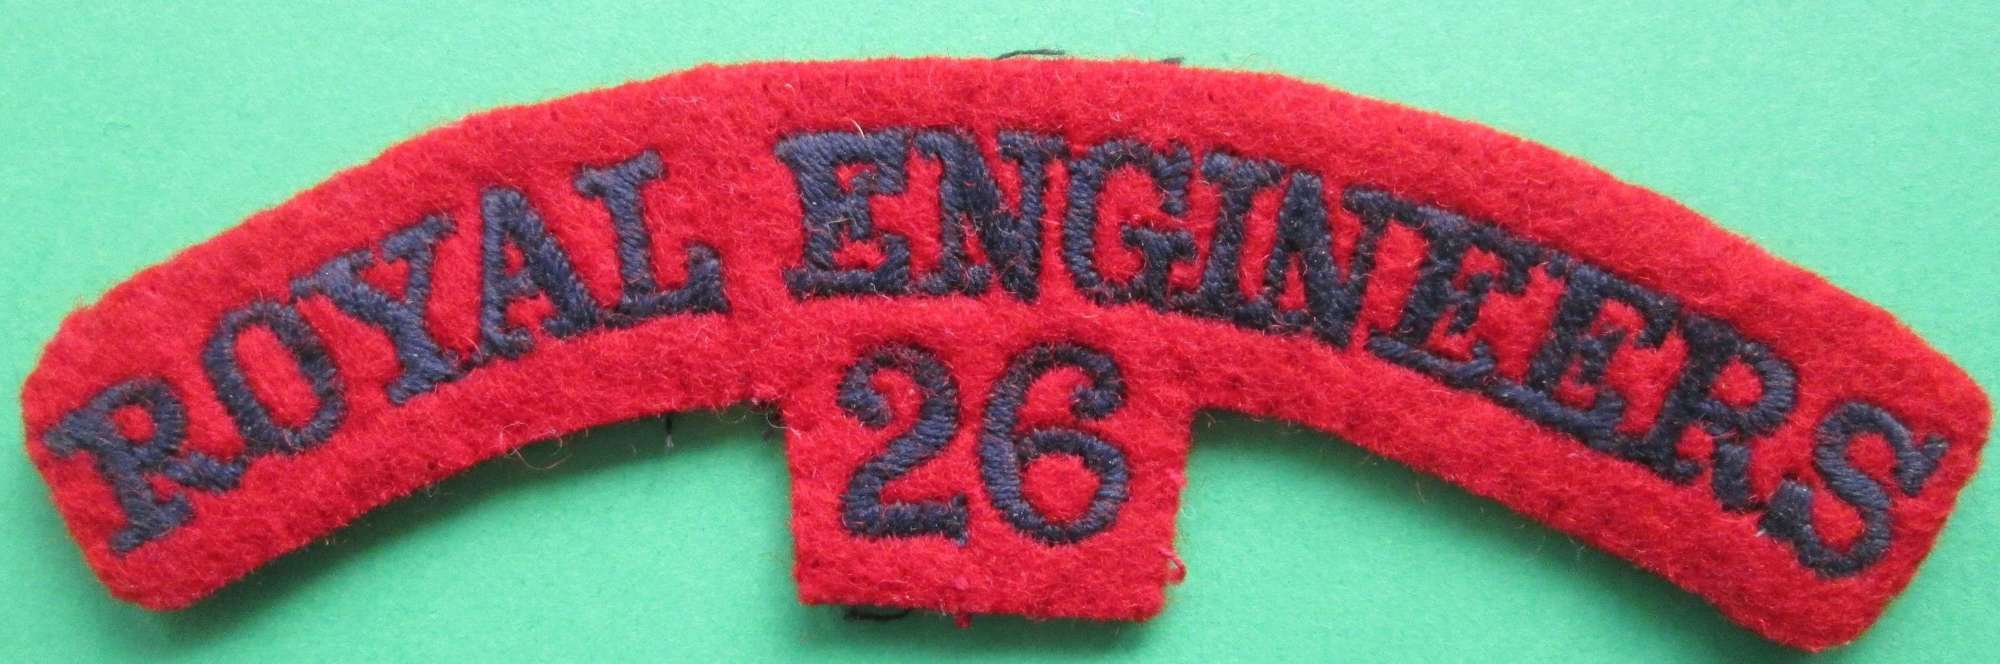 A Royal Engineers 26 shoulder title